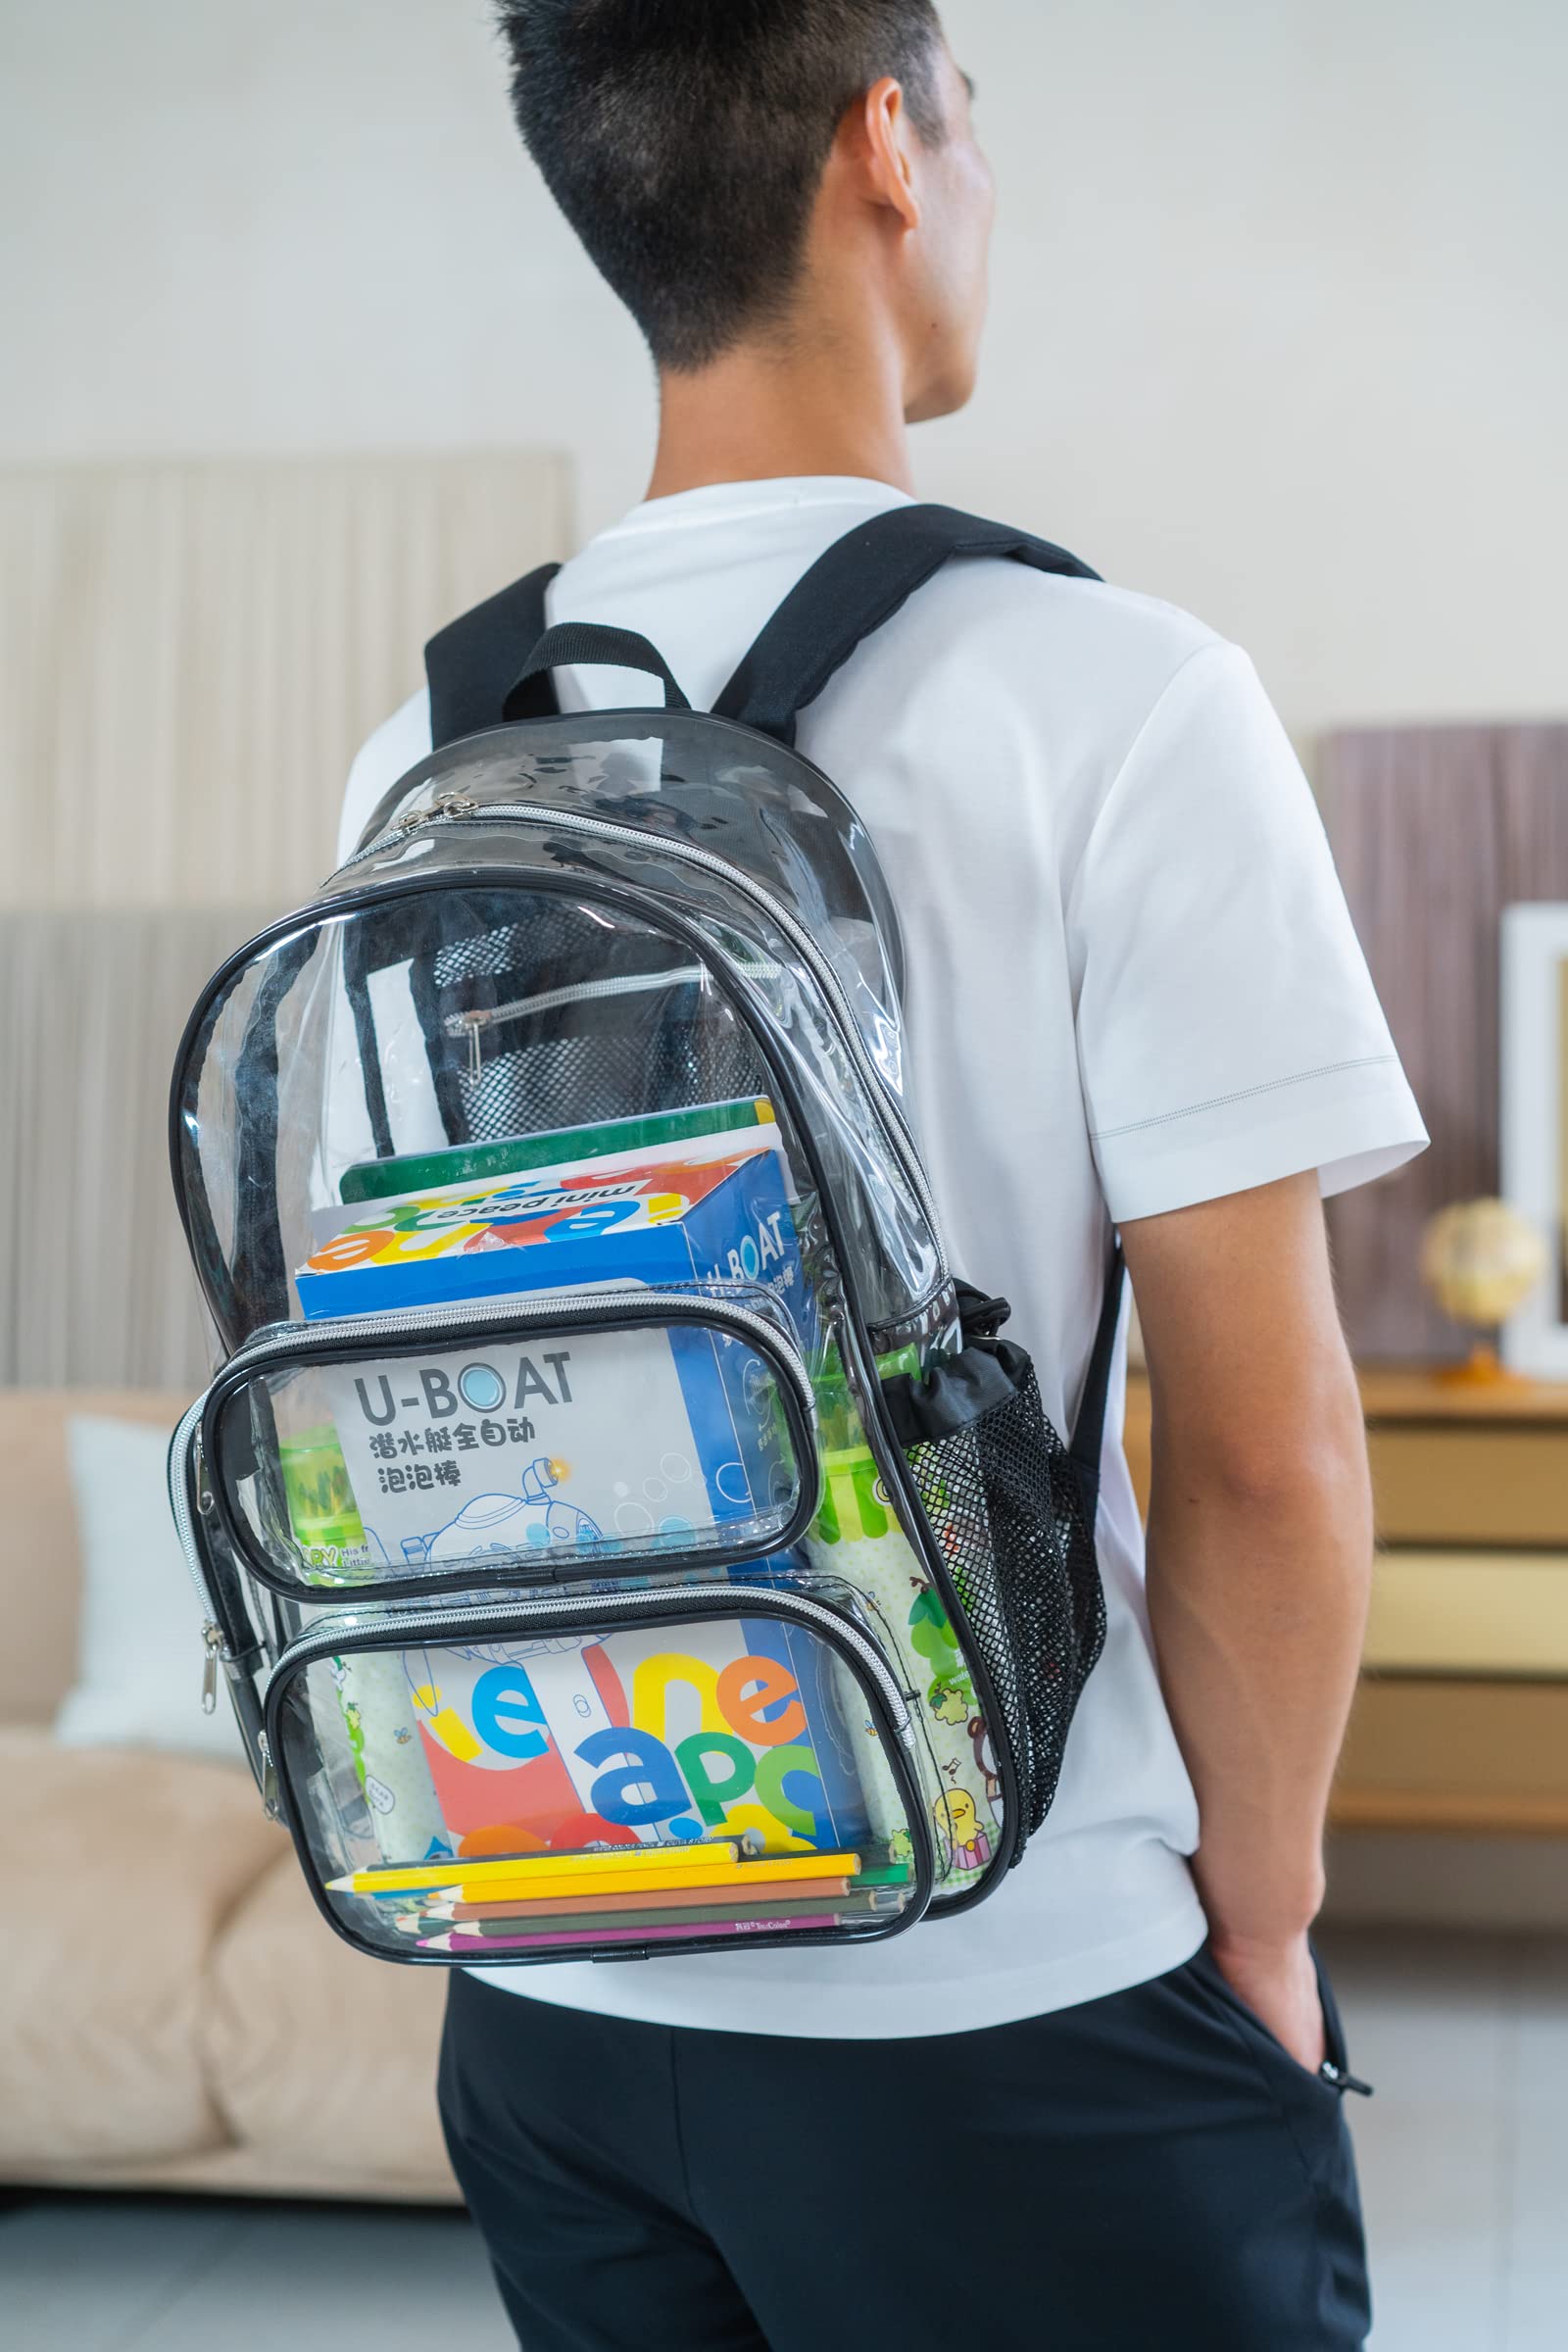 CAMTOP Clear Backpack Heavy Duty Transparent Bag See Through BookBag for Student School Work Festival Sport Travel (Black)